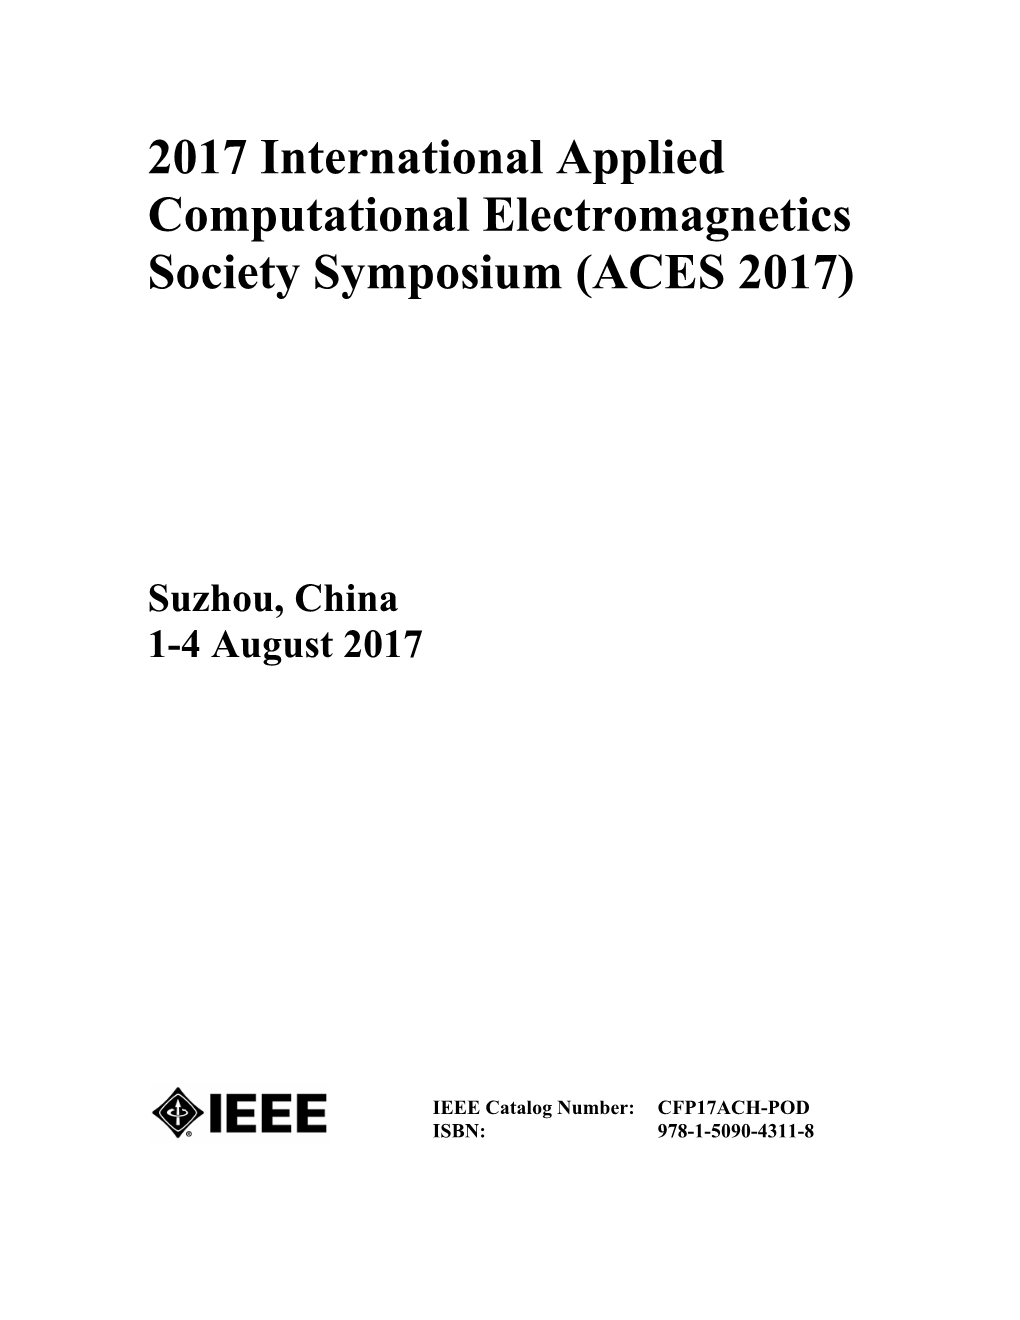 2017 International Applied Computational Electromagnetics